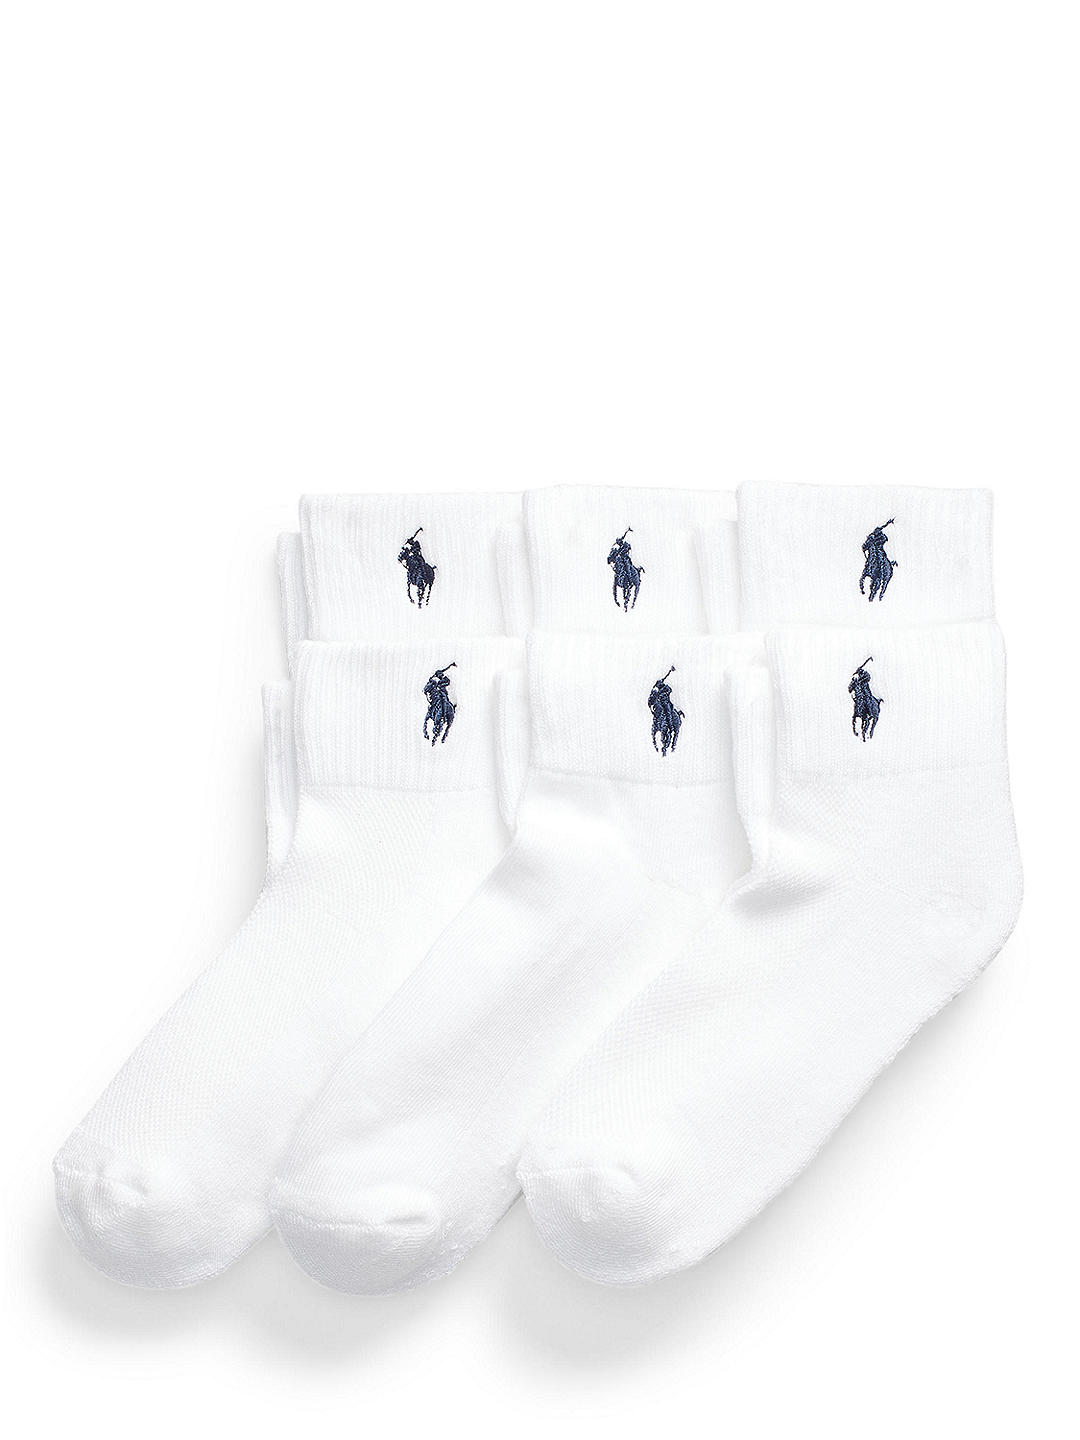 Ralph Lauren Cushion Sole Ankle Socks, Pack of 6, White